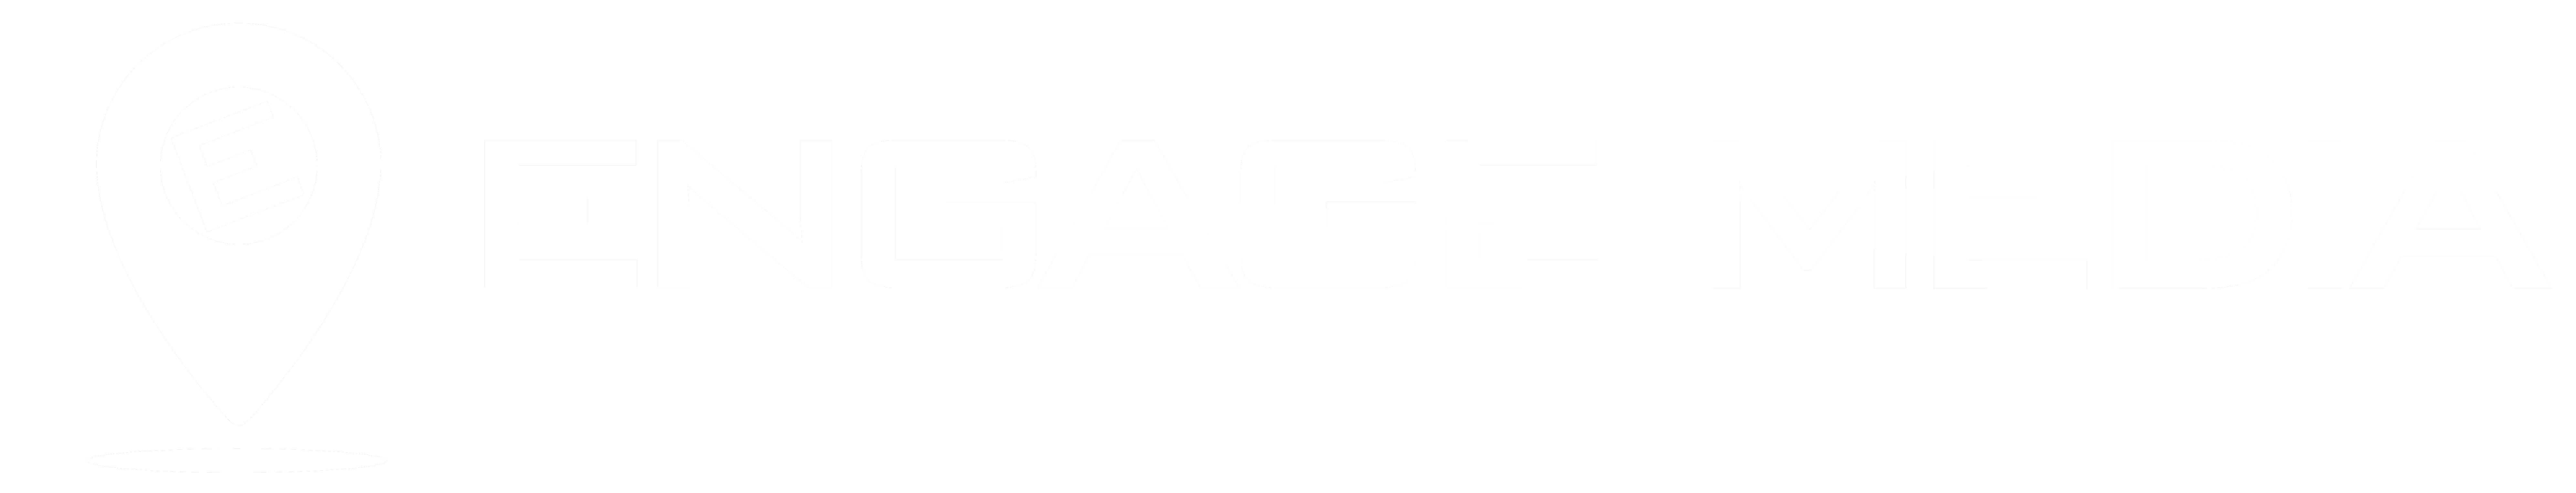 engage logo white